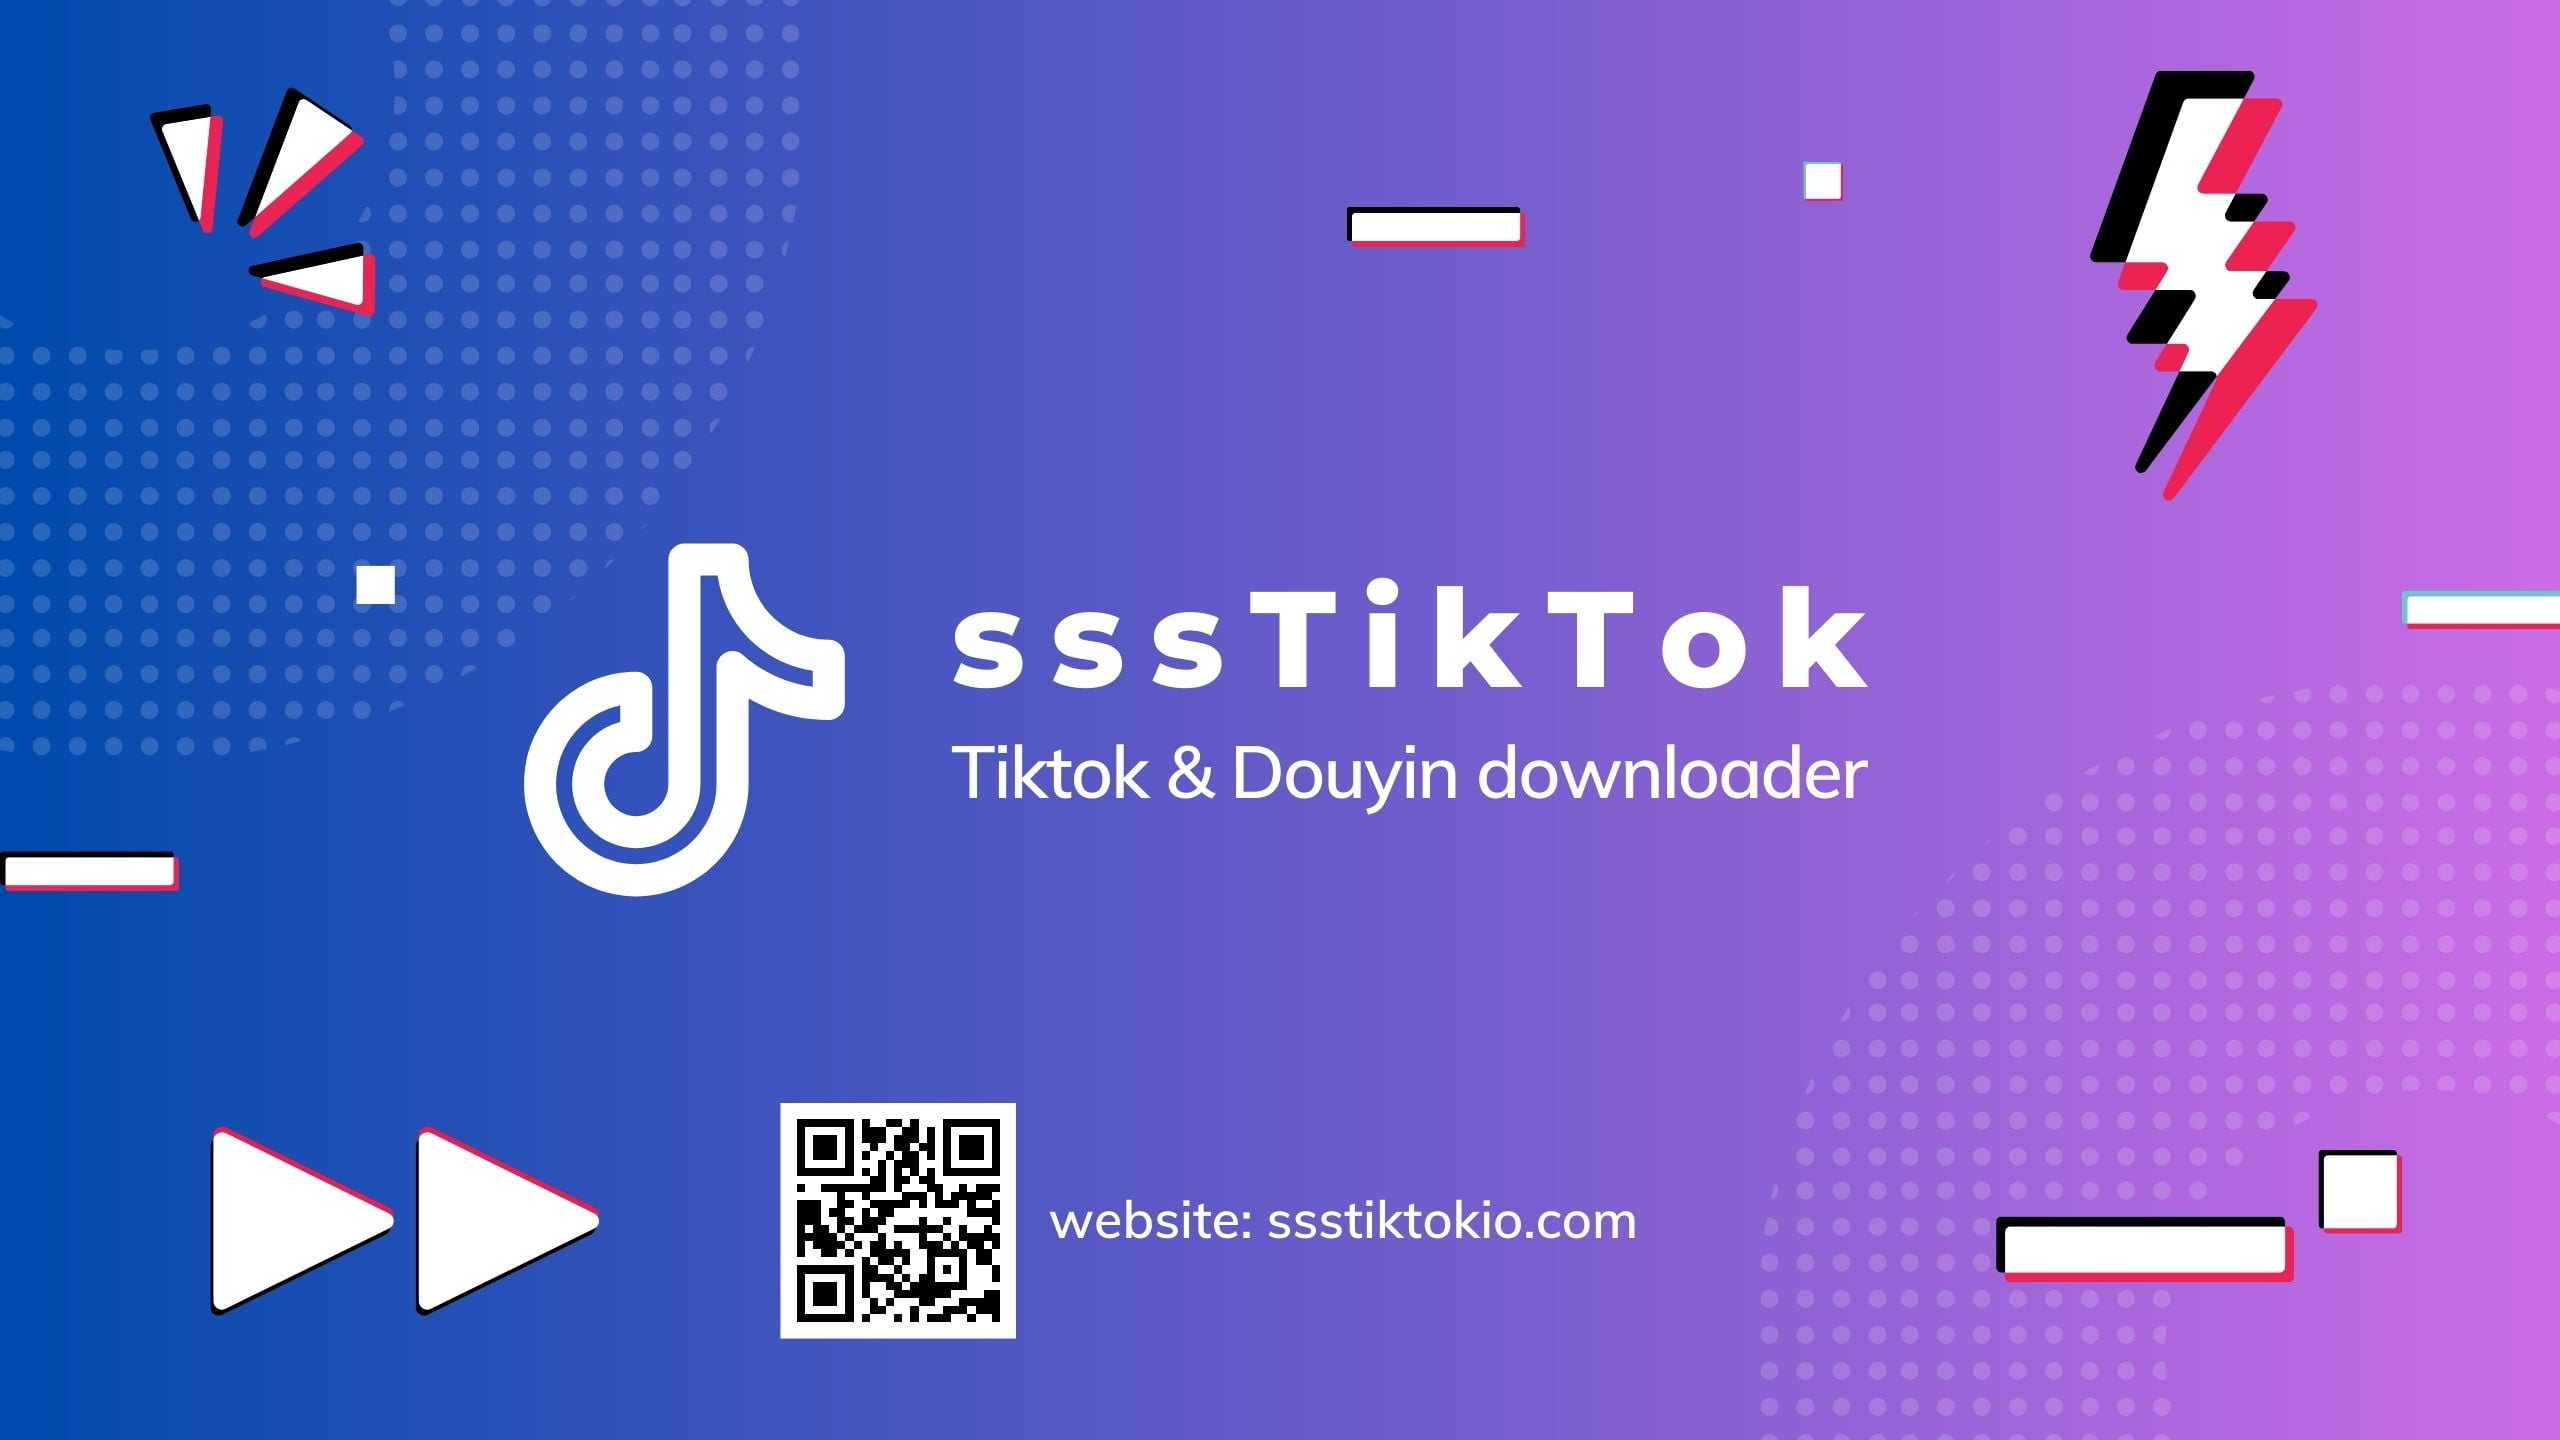 sssTiktok - Tiktok Downloader - Download video tiktok ไม่มีลายน้ำ